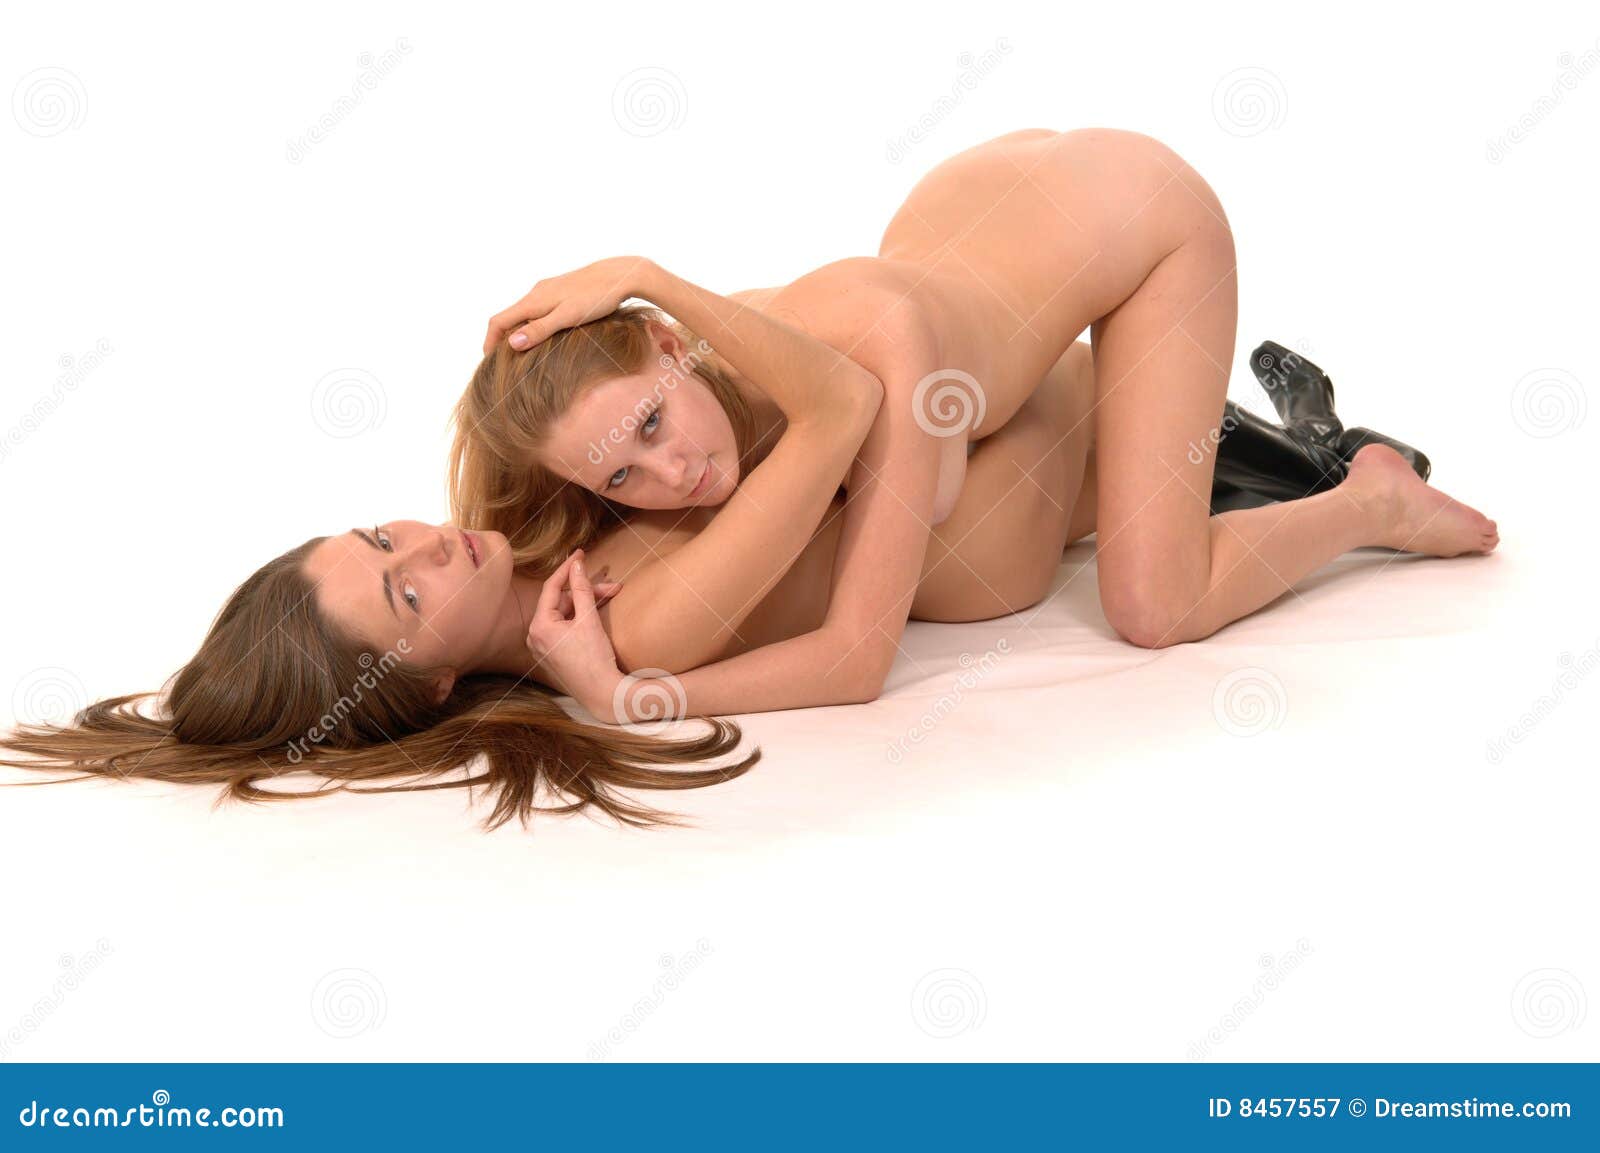 Nude lesbian couple